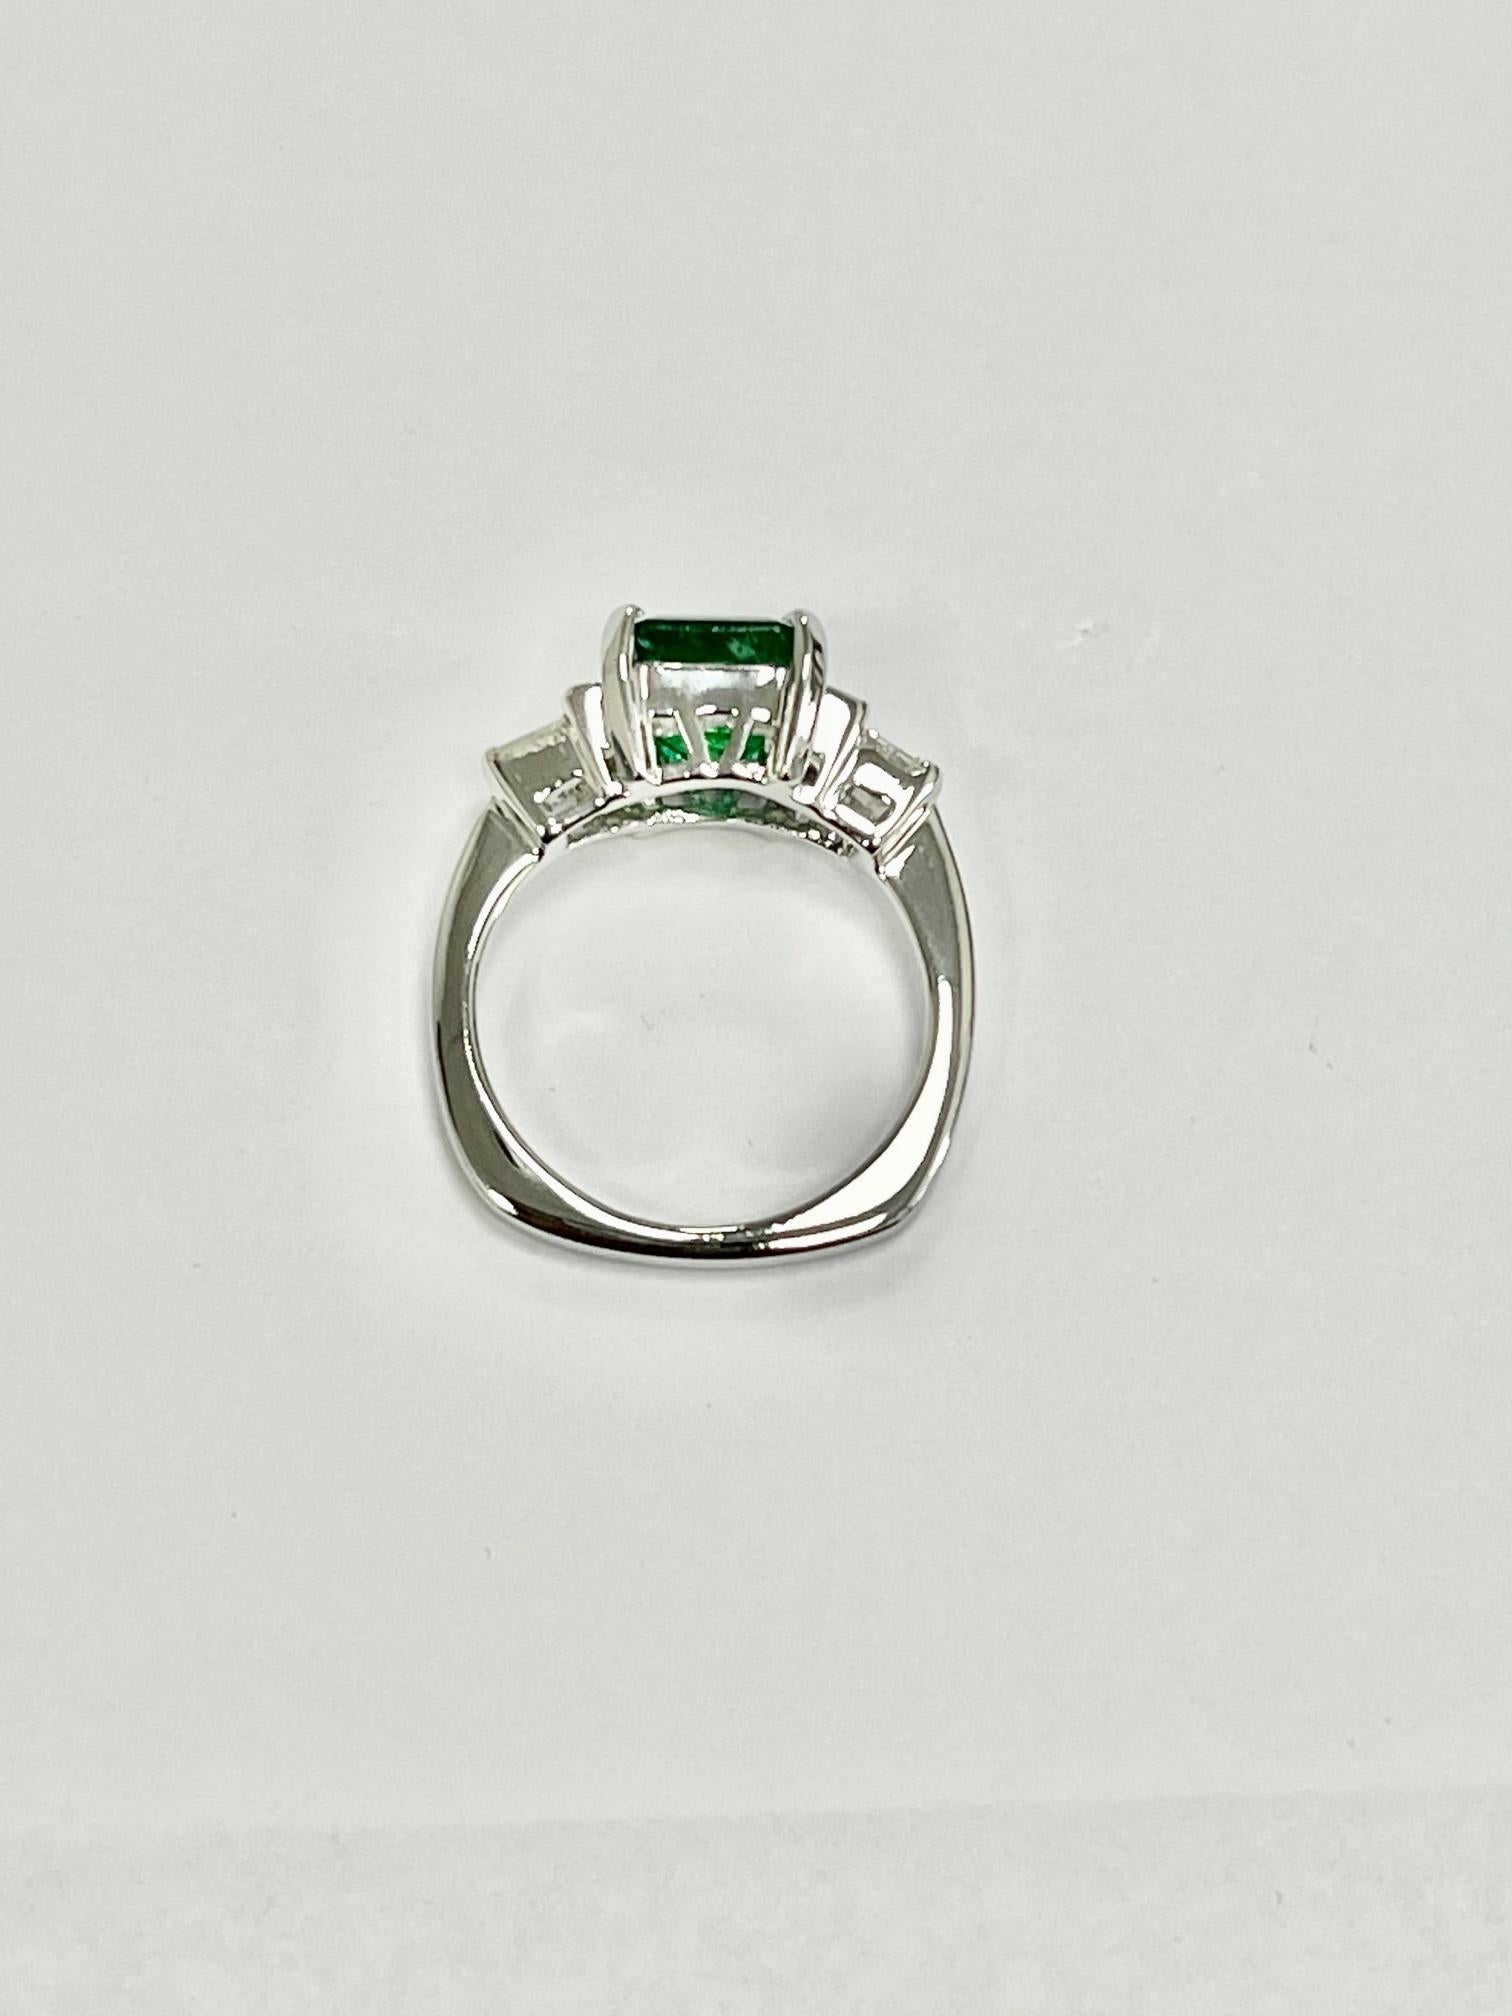 Emerald Cut 2.04 Carat Emerald Diamond Cocktail Ring For Sale